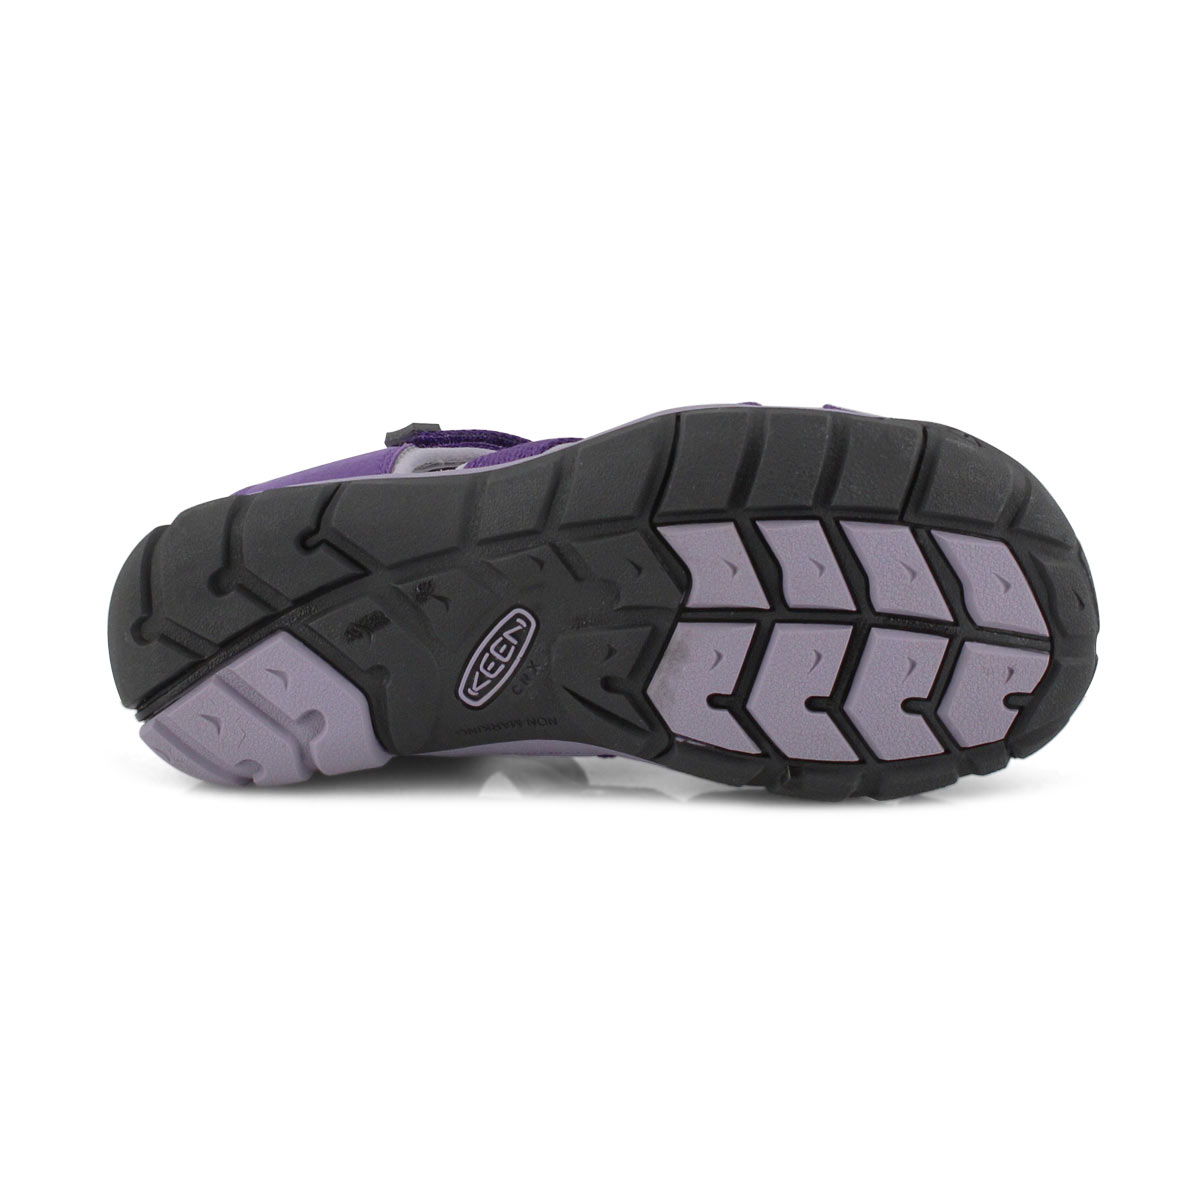 Girl's Seacamp II Sport Sandal - Purple/Grey